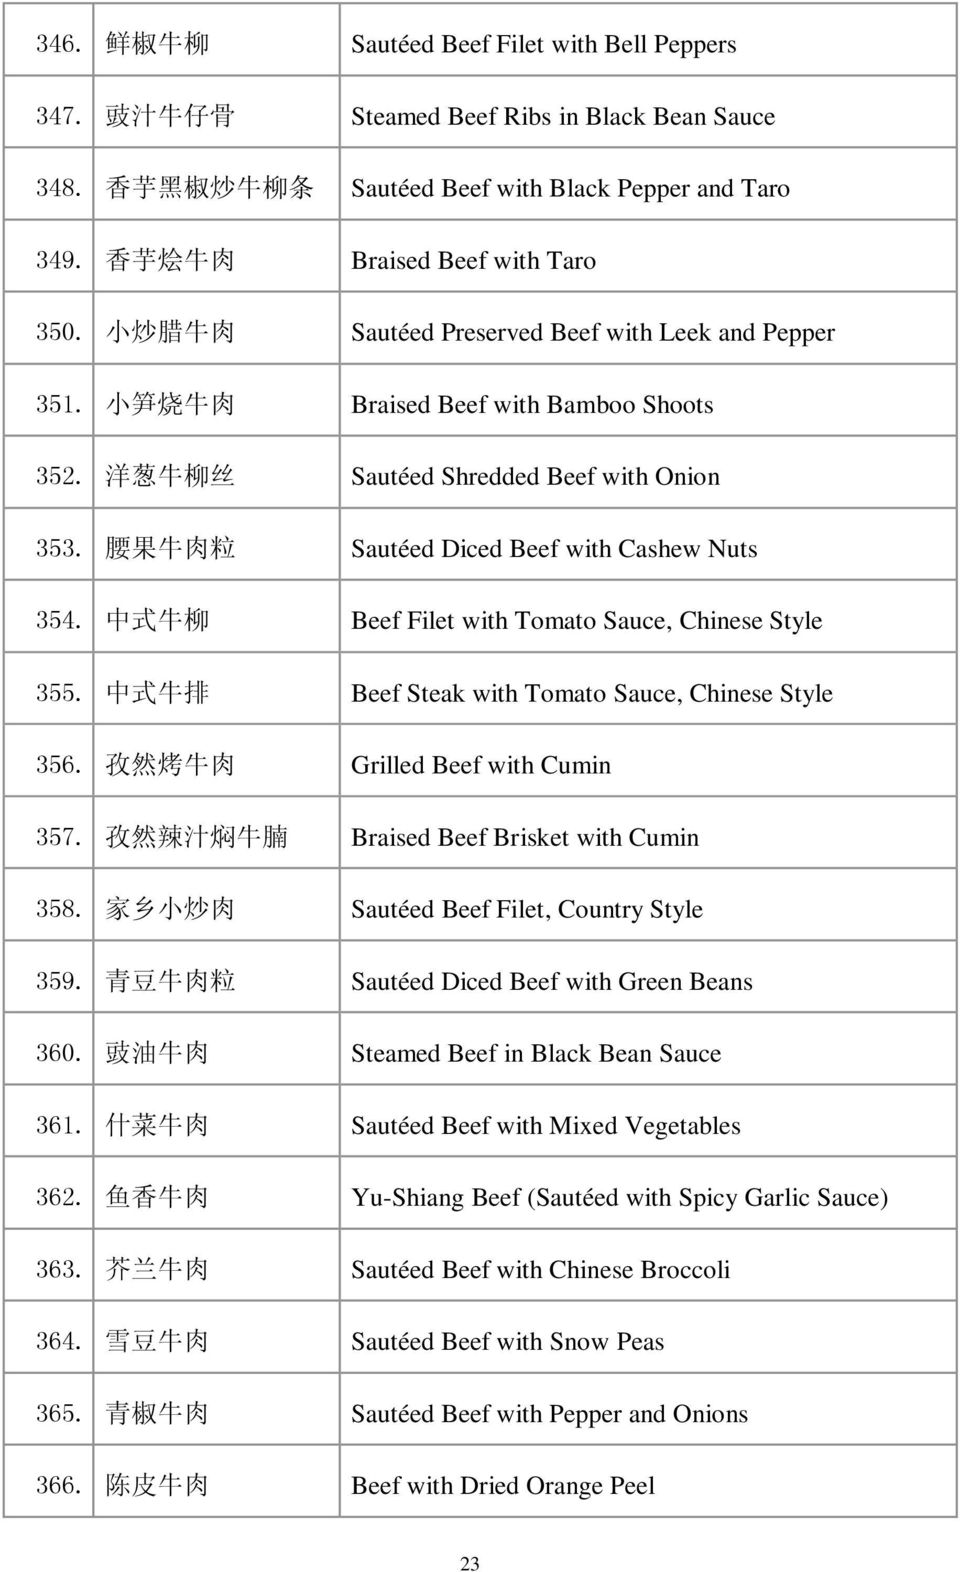 腰 果 牛 肉 粒 Sautéed Diced Beef with Cashew Nuts 354. 中 式 牛 柳 Beef Filet with Tomato Sauce, Chinese Style 355. 中 式 牛 排 Beef Steak with Tomato Sauce, Chinese Style 356.